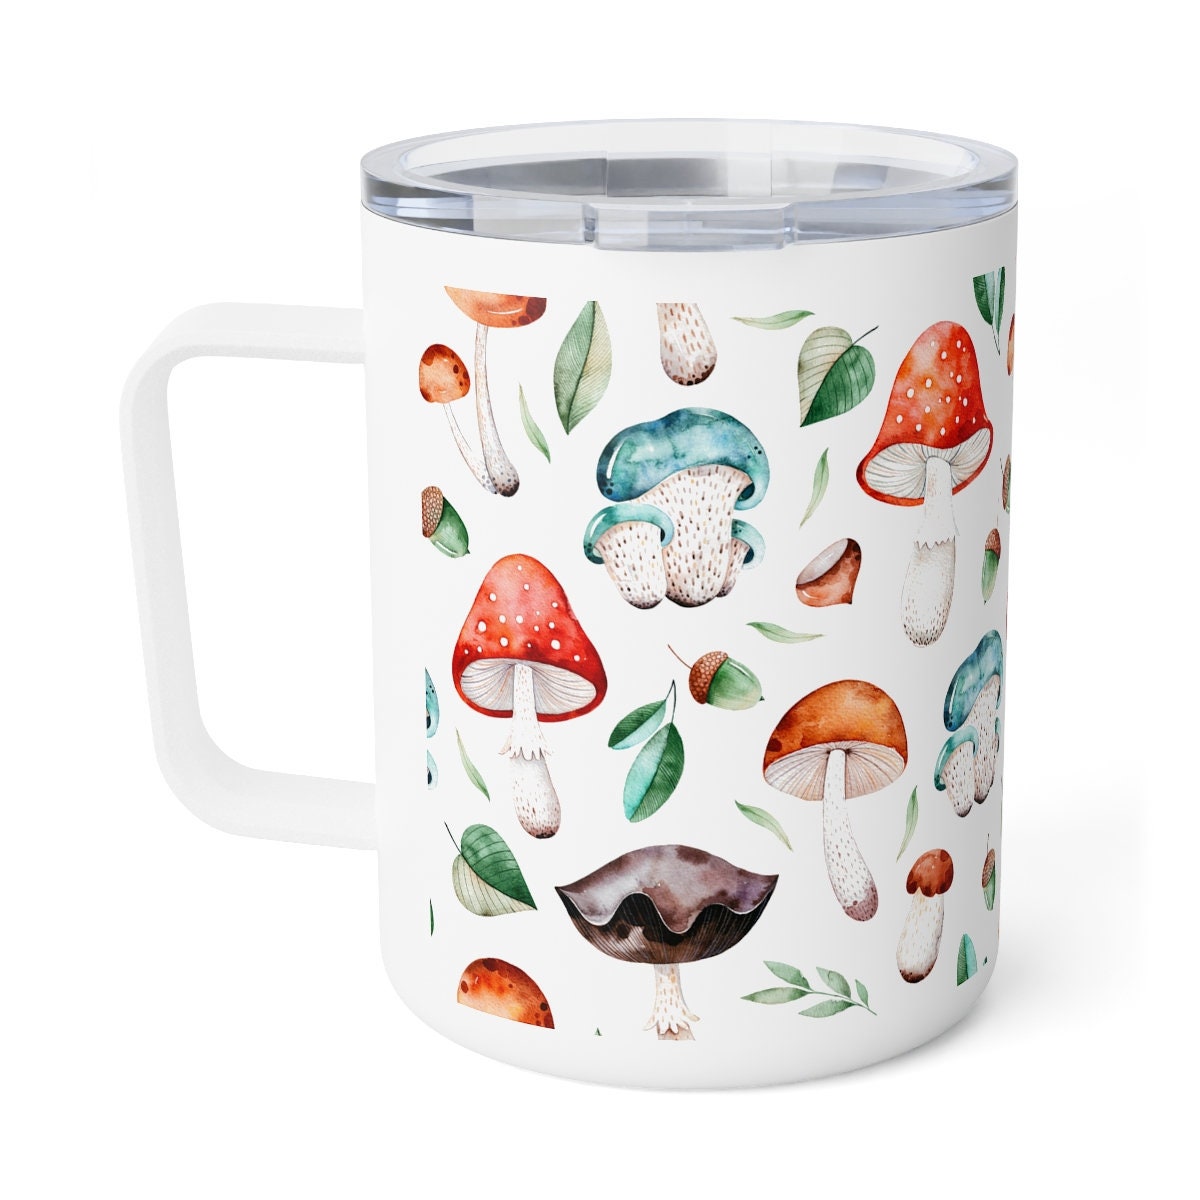 Acorns and Mushrooms Insulated Coffee Mug Mug Coffee Mug Stainless